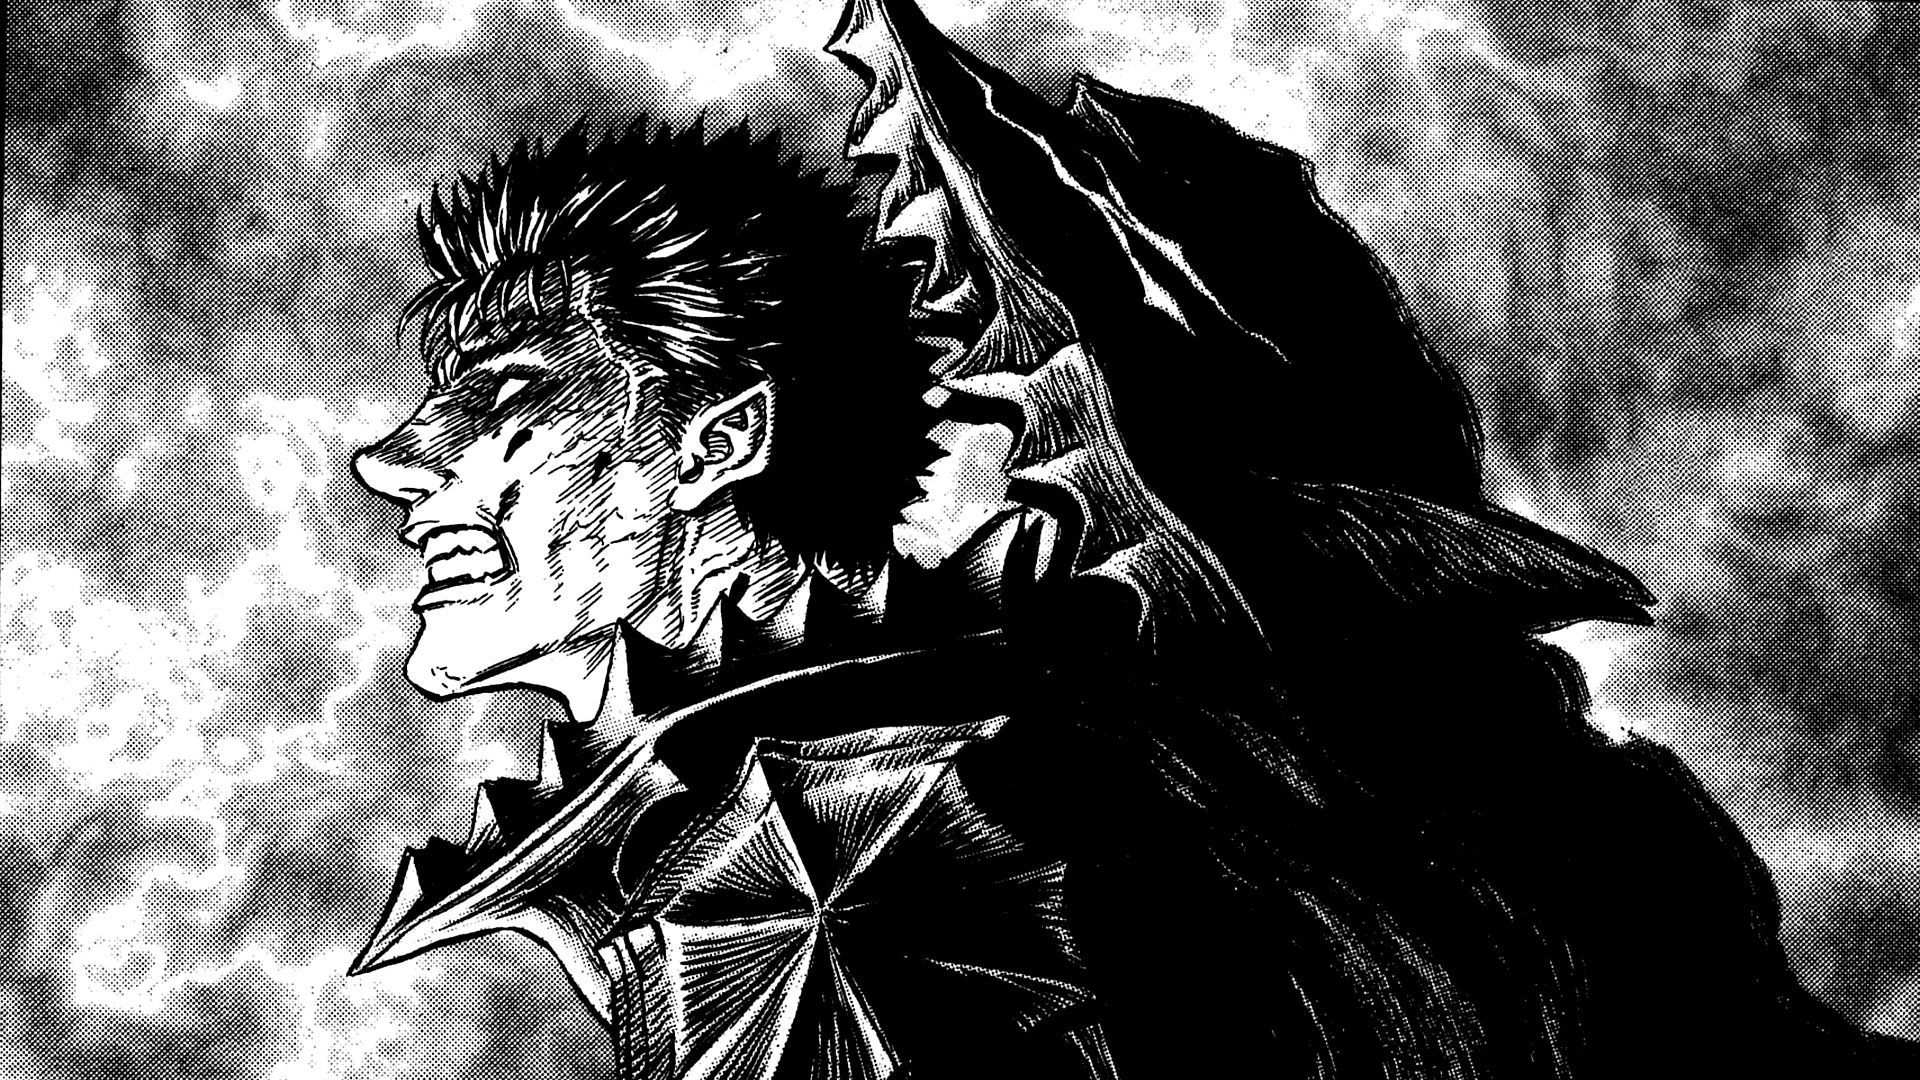 Guts as seen in the Berserk manga (Image via Hakusensha)